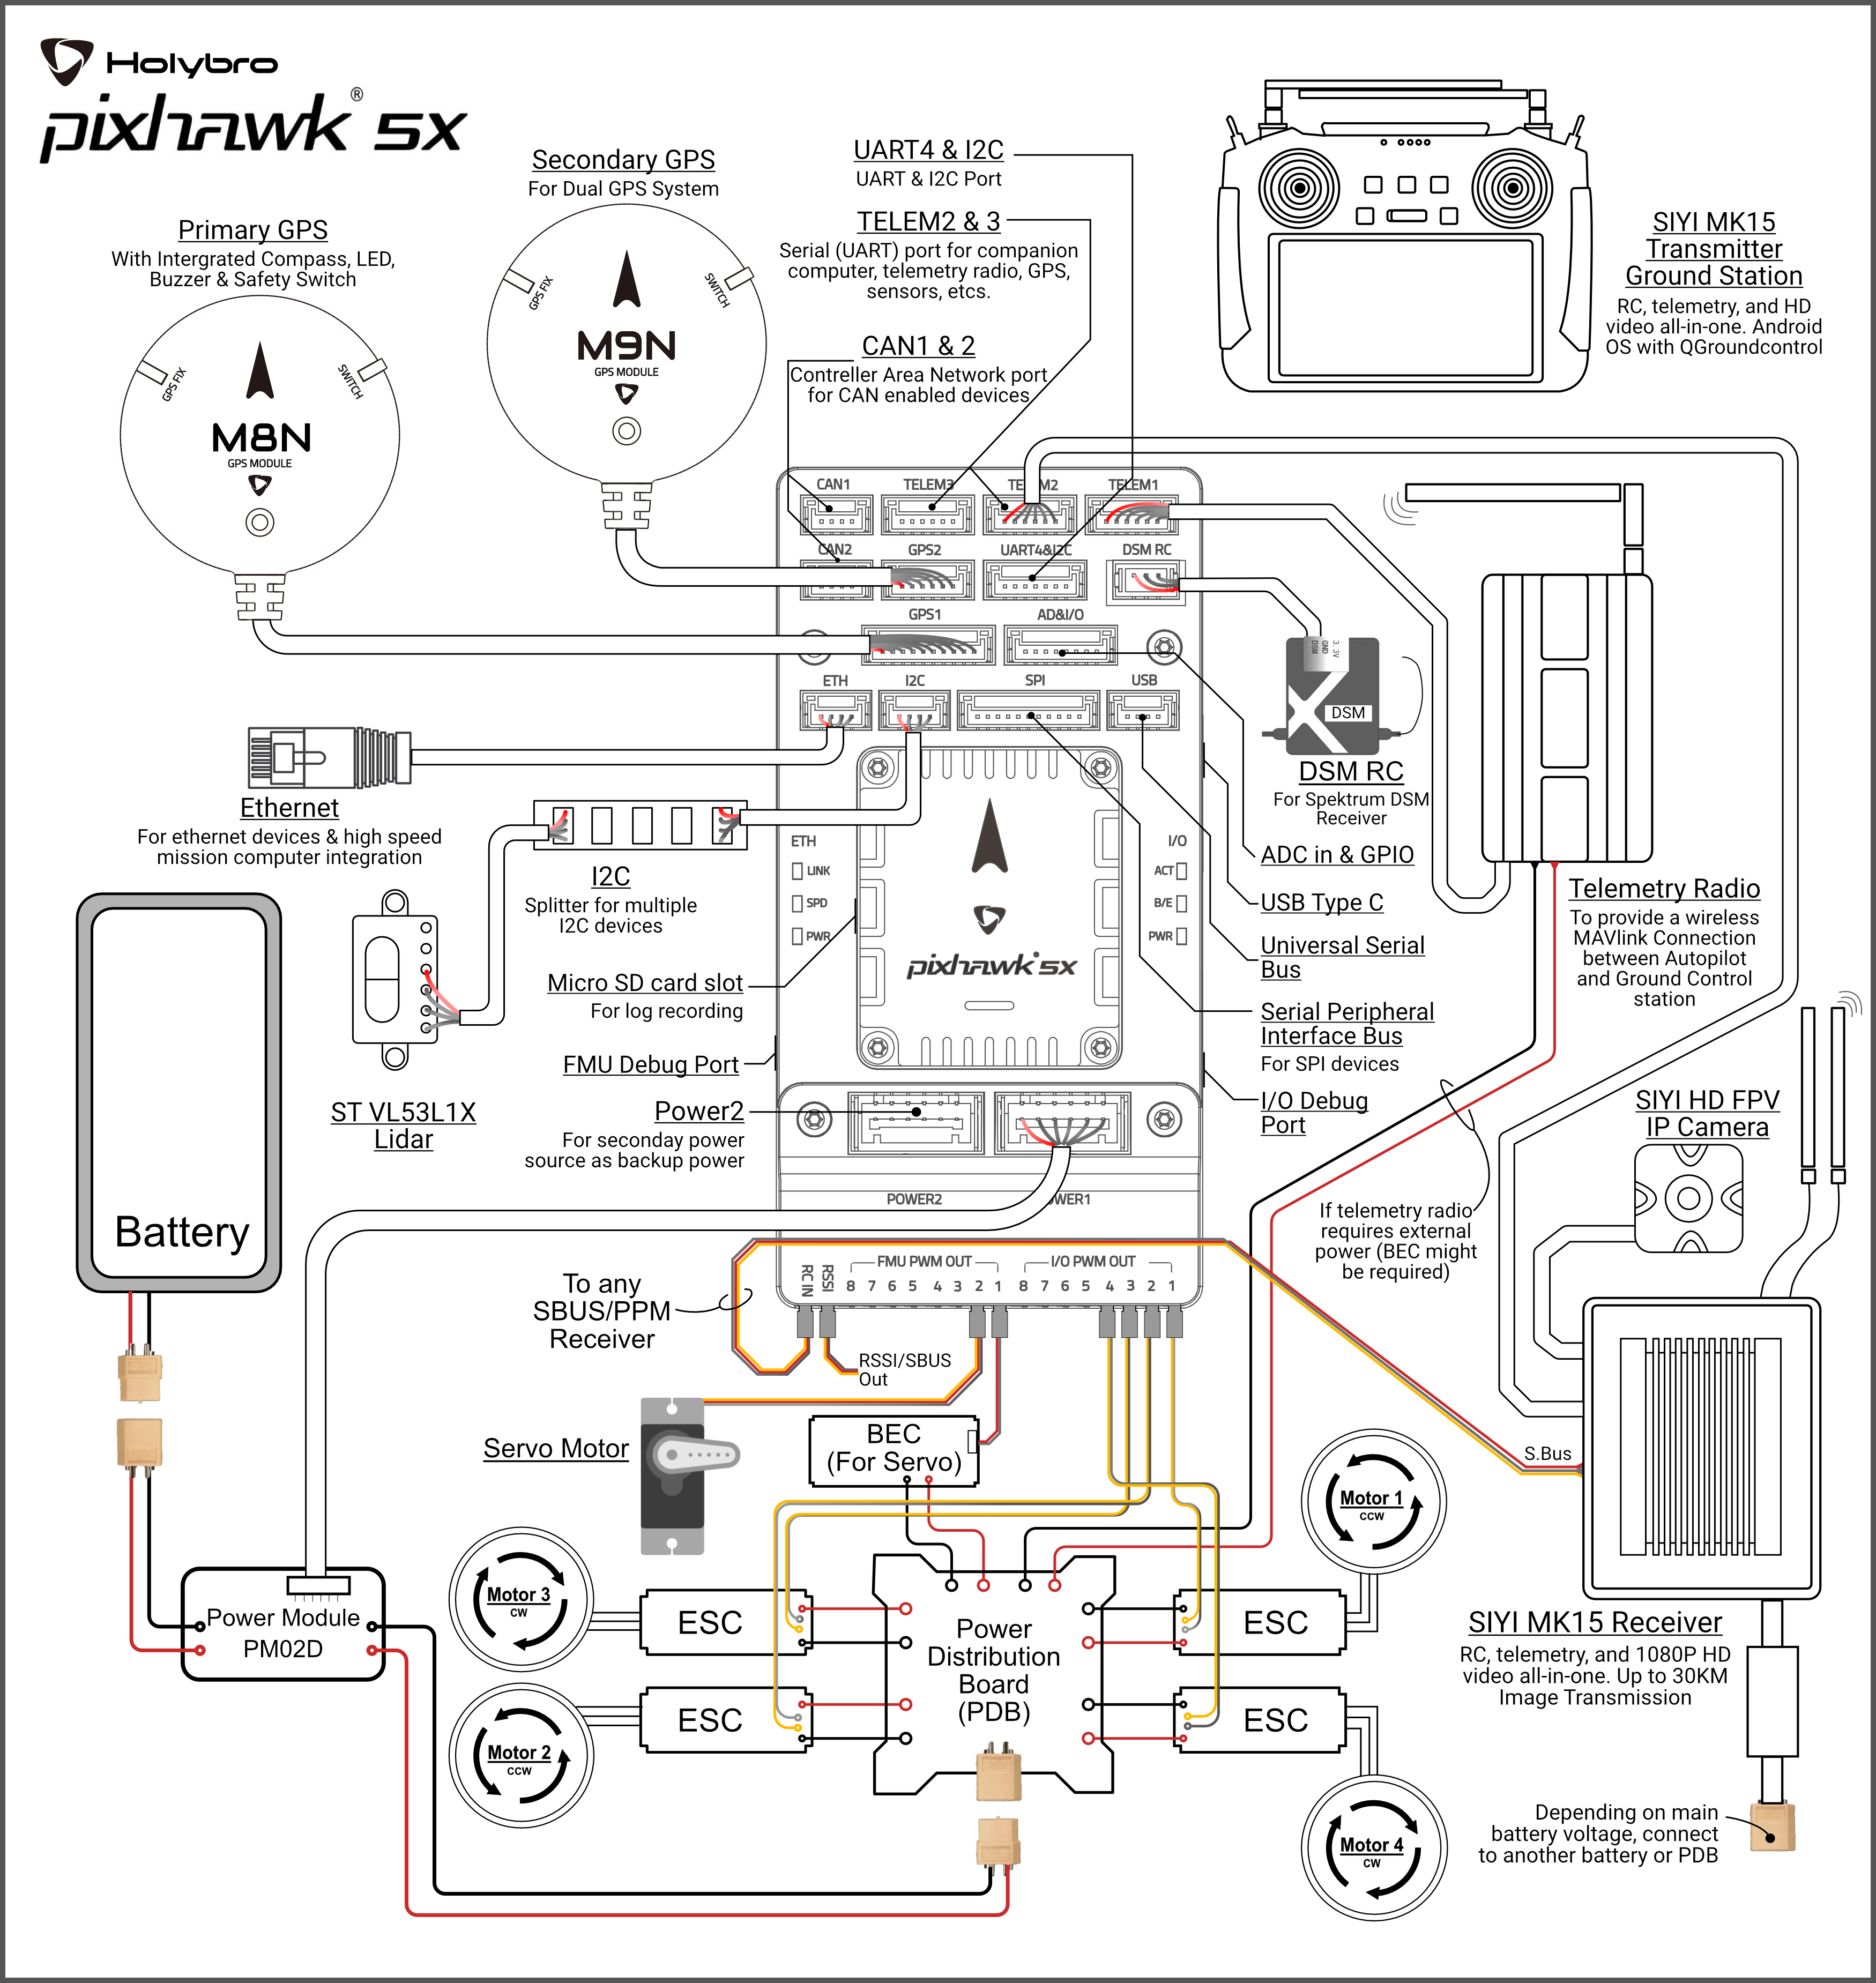 ../_images/pixhawk5x_wiring_diagram.png